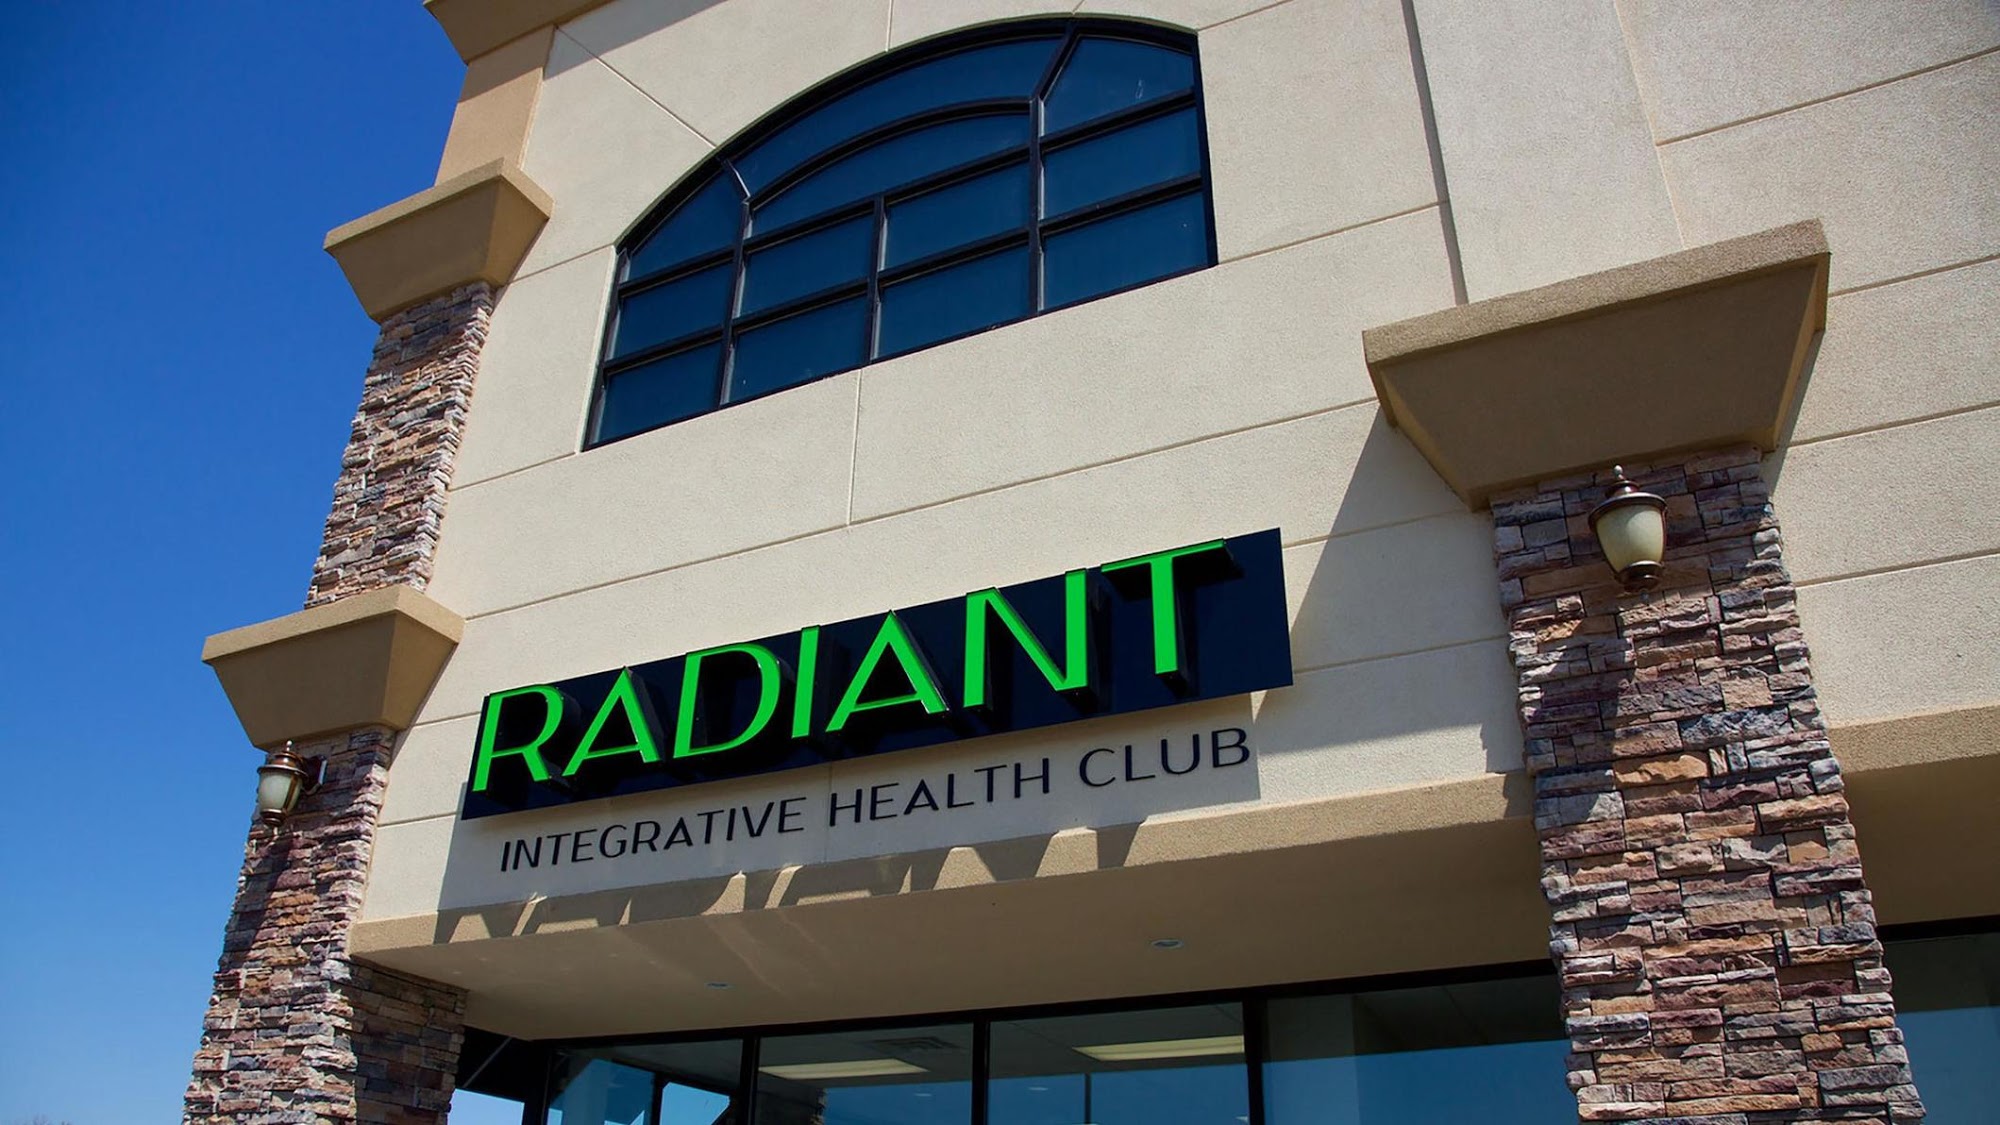 Radiant Integrative Health